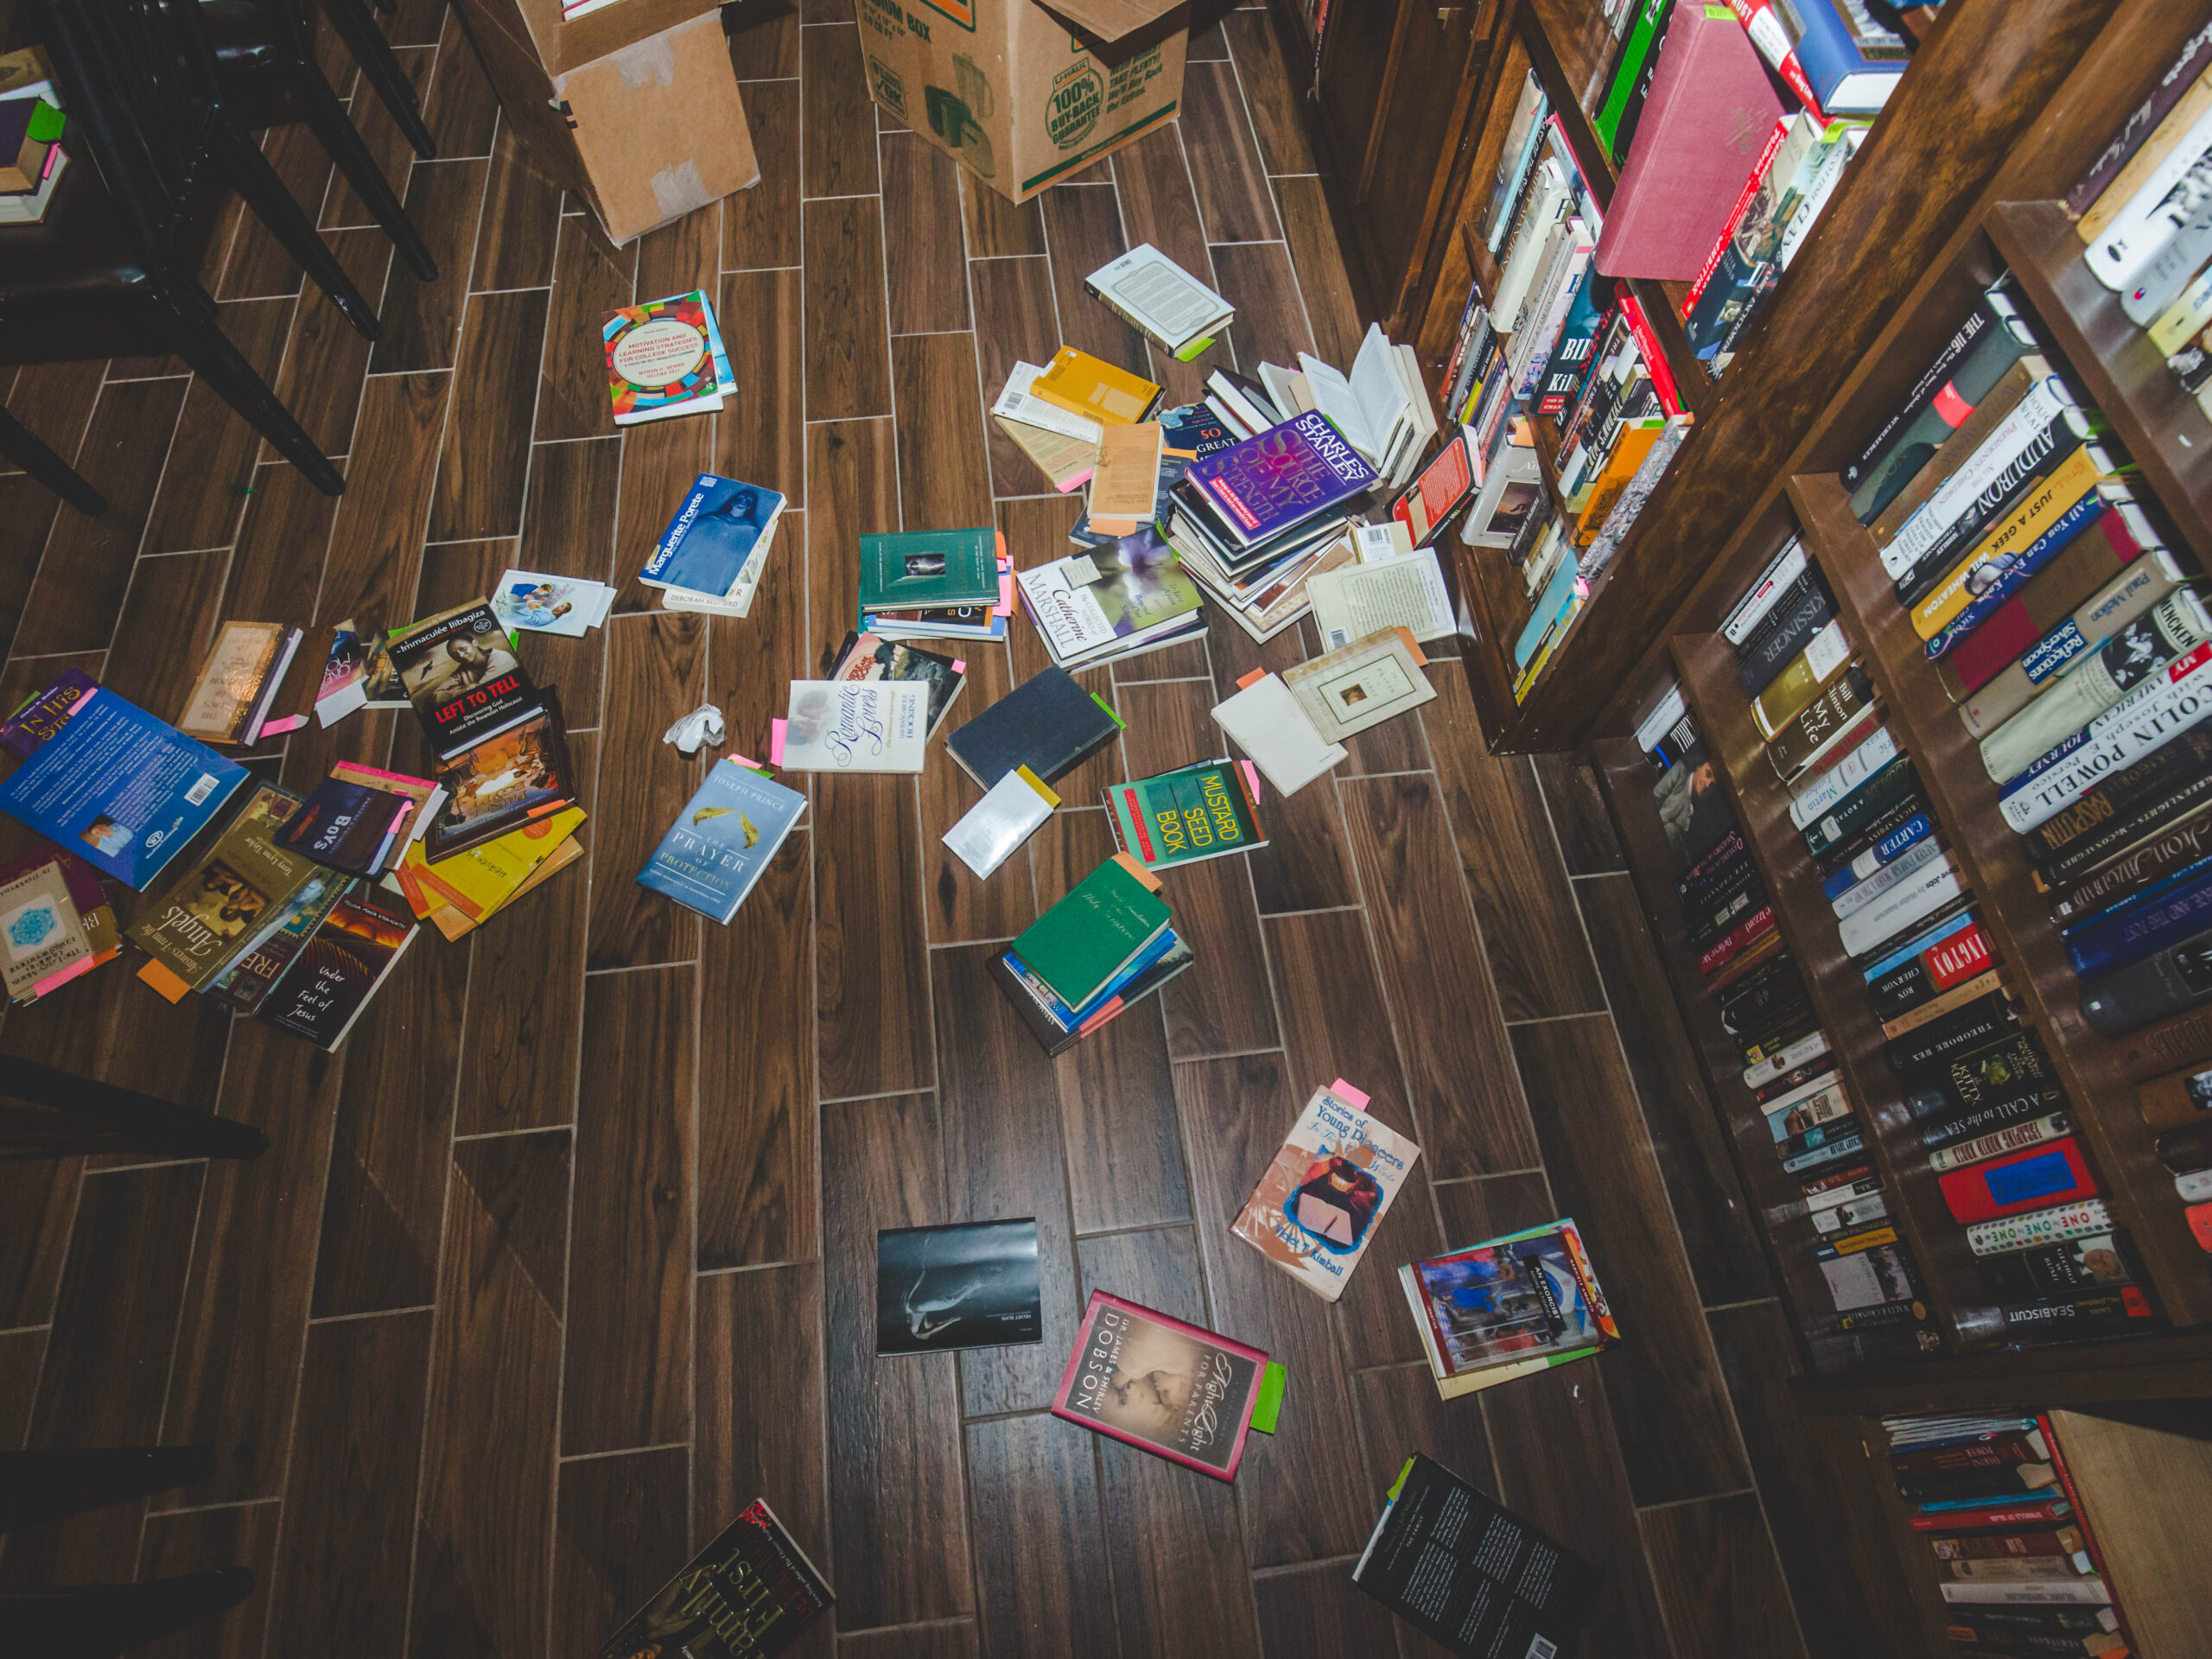 Búho Bookstore at the Historic Calderoni Building – BIG Success Story